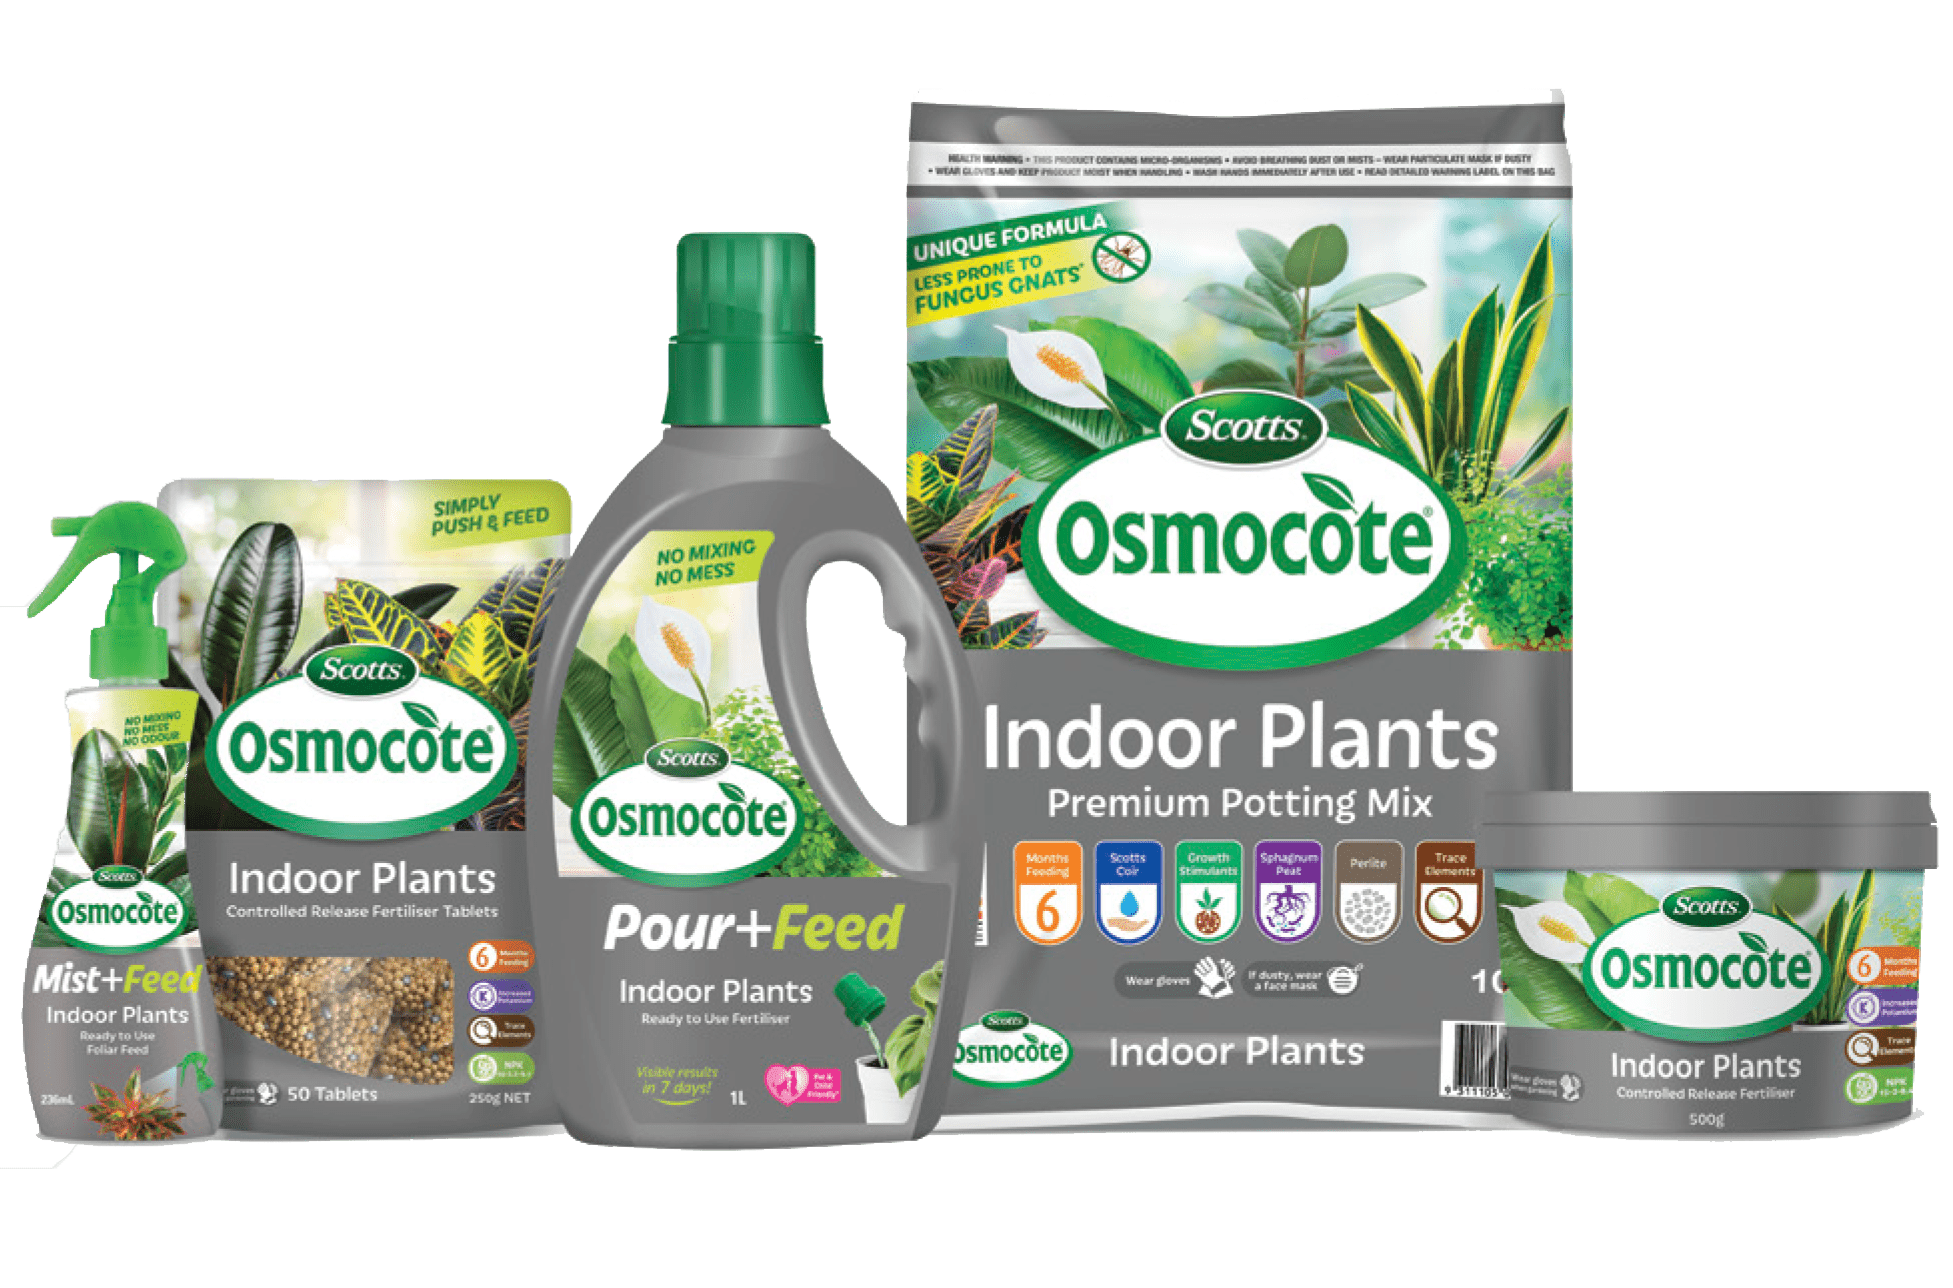 Scotts Osmocote for Indoor Plants